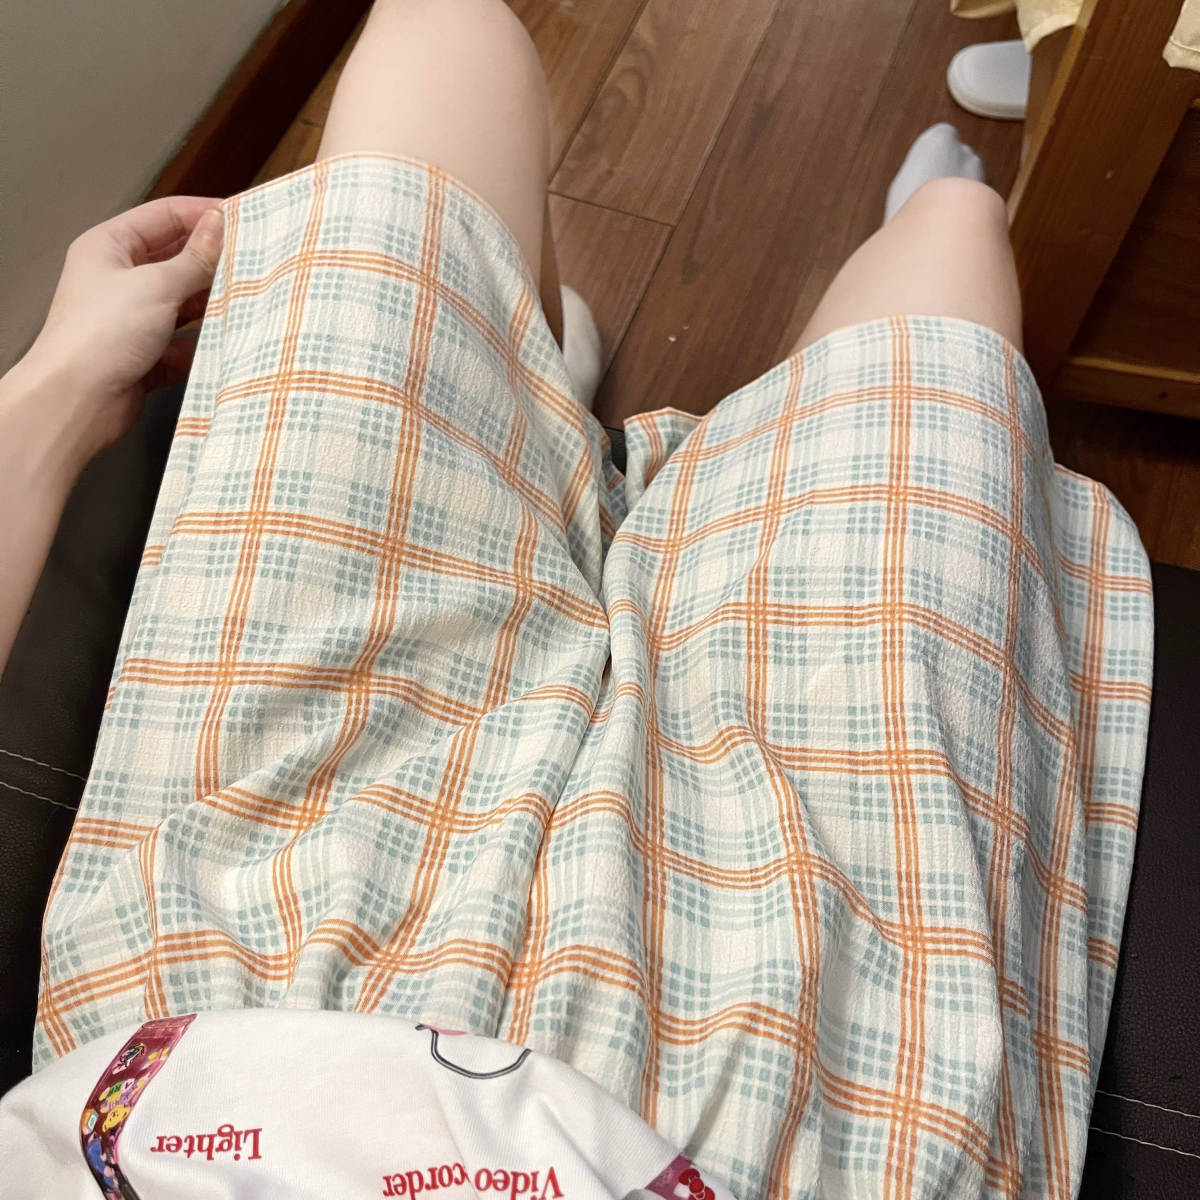 Walking pants pajamas women's summer thin loose casual shorts printed cartoon cute anti-mosquito pants home trousers